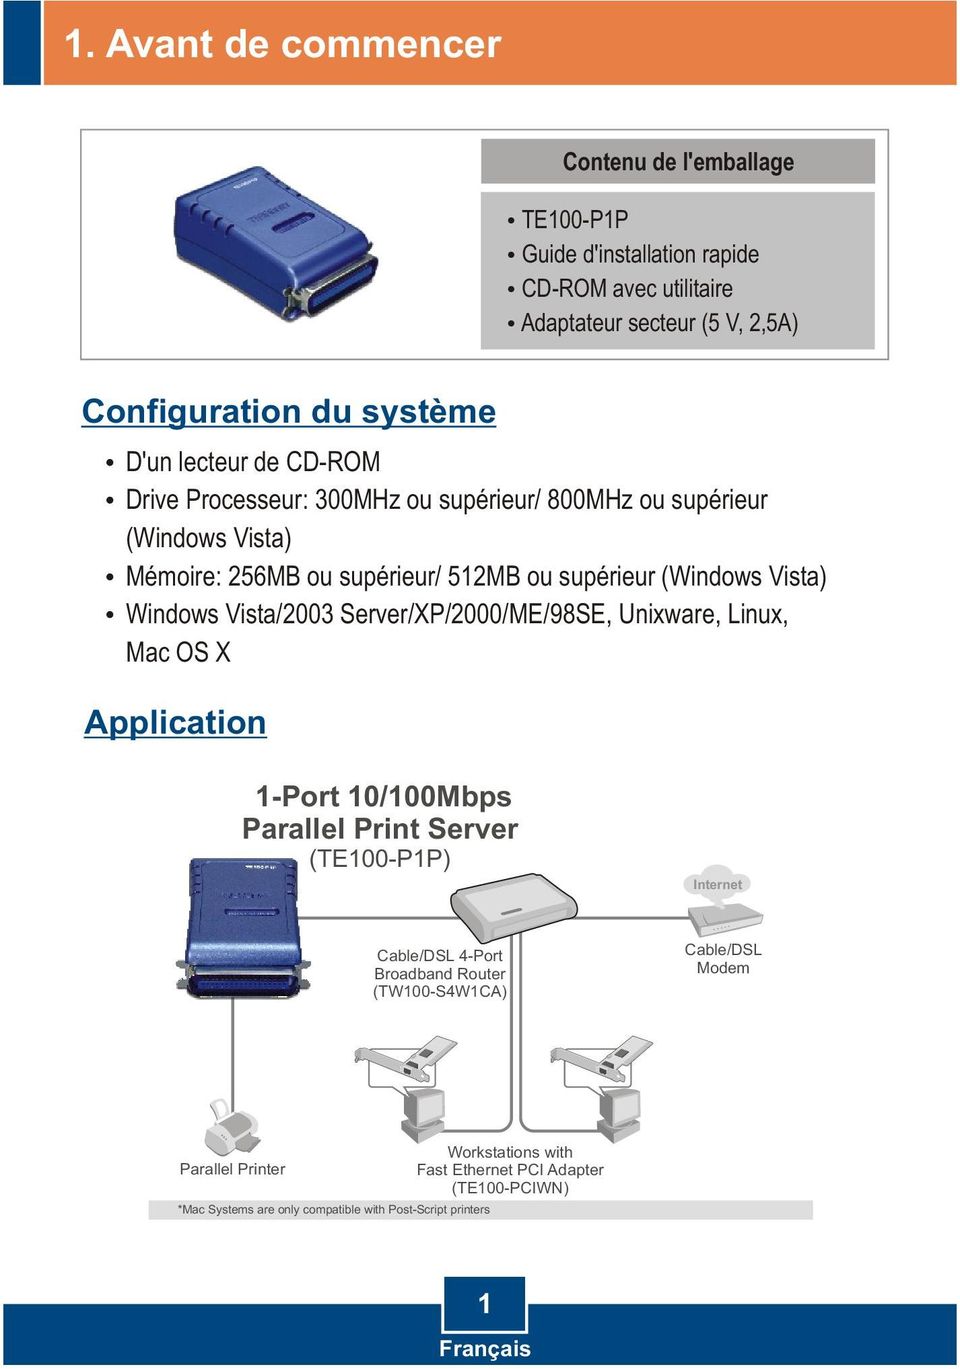 Vista/2003 Server/XP/2000/ME/98SE, Unixware, Linux, Mac OS X Application 1-Port 10/100Mbps Parallel Print Server (TE100-P1P) Internet Cable/DSL 4-Port Broadband